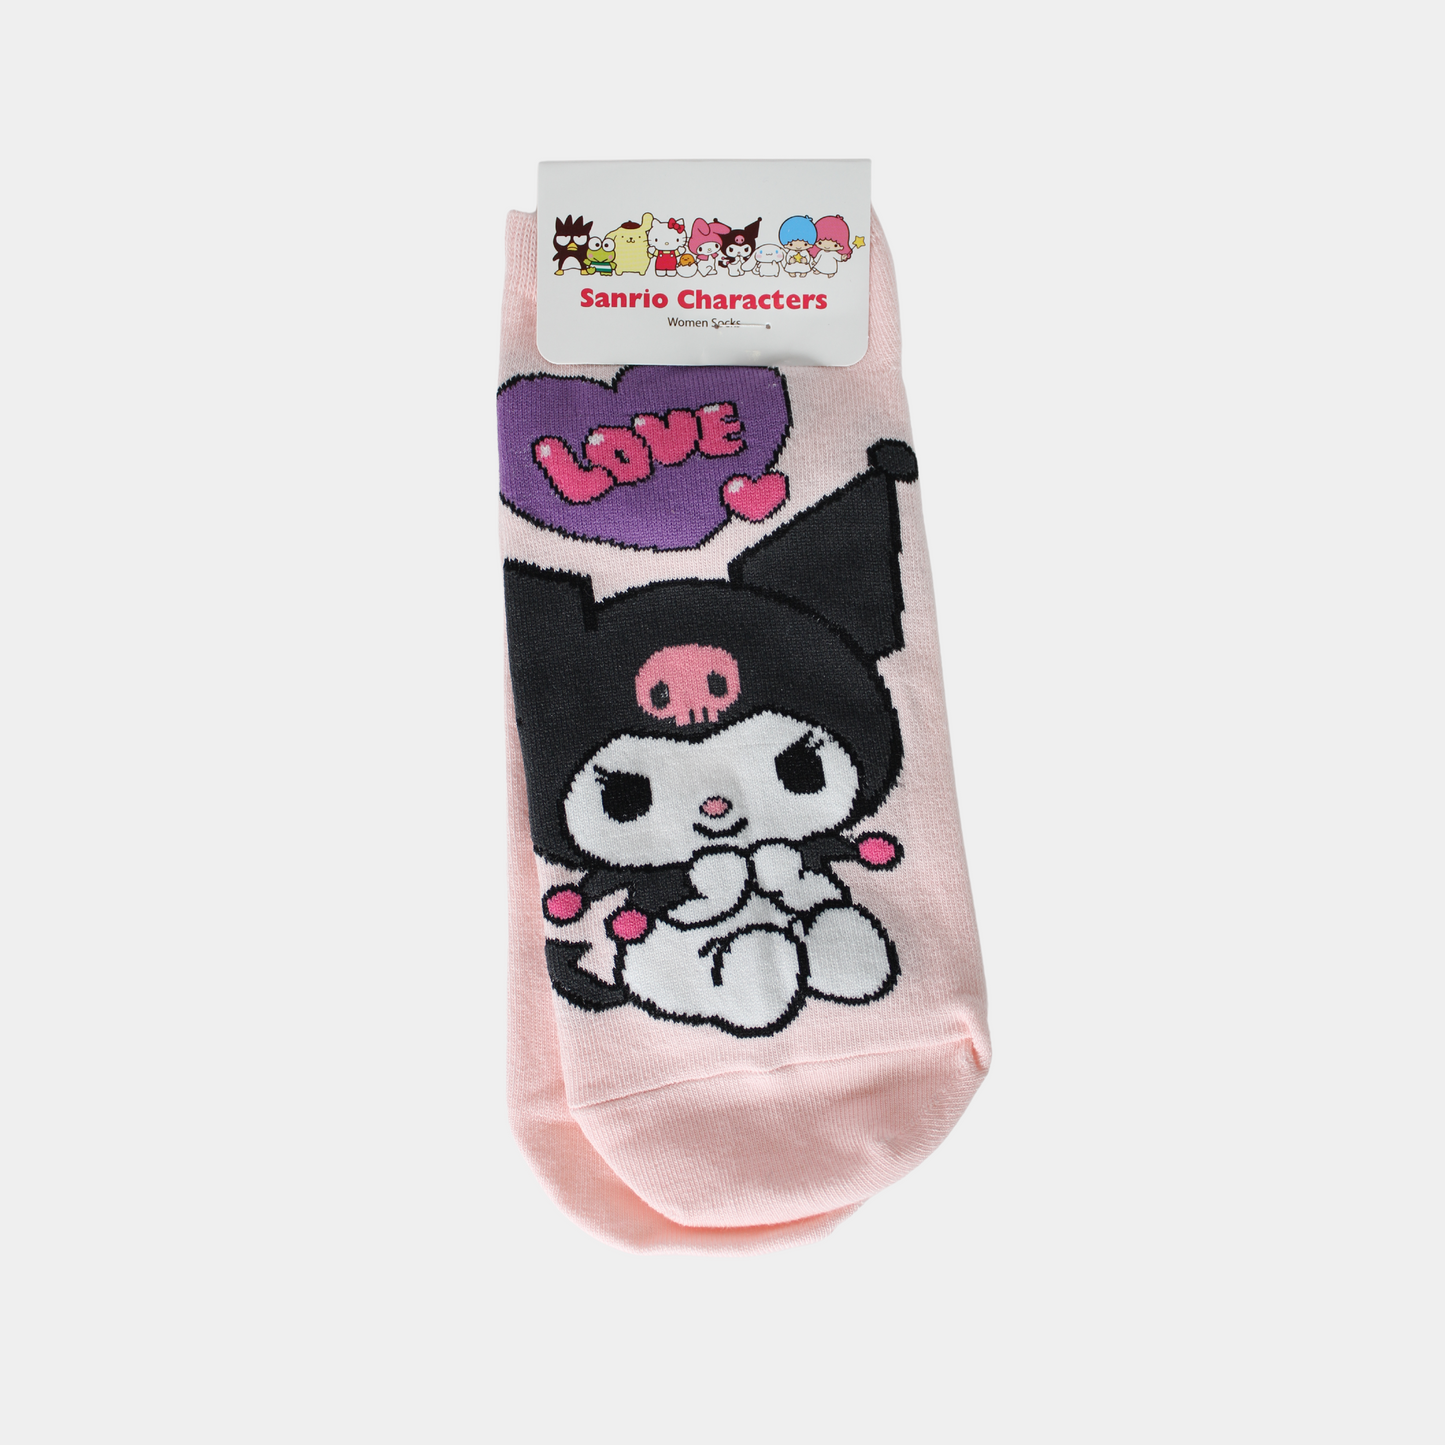 Sanrio Characters Socks [Kuromi]